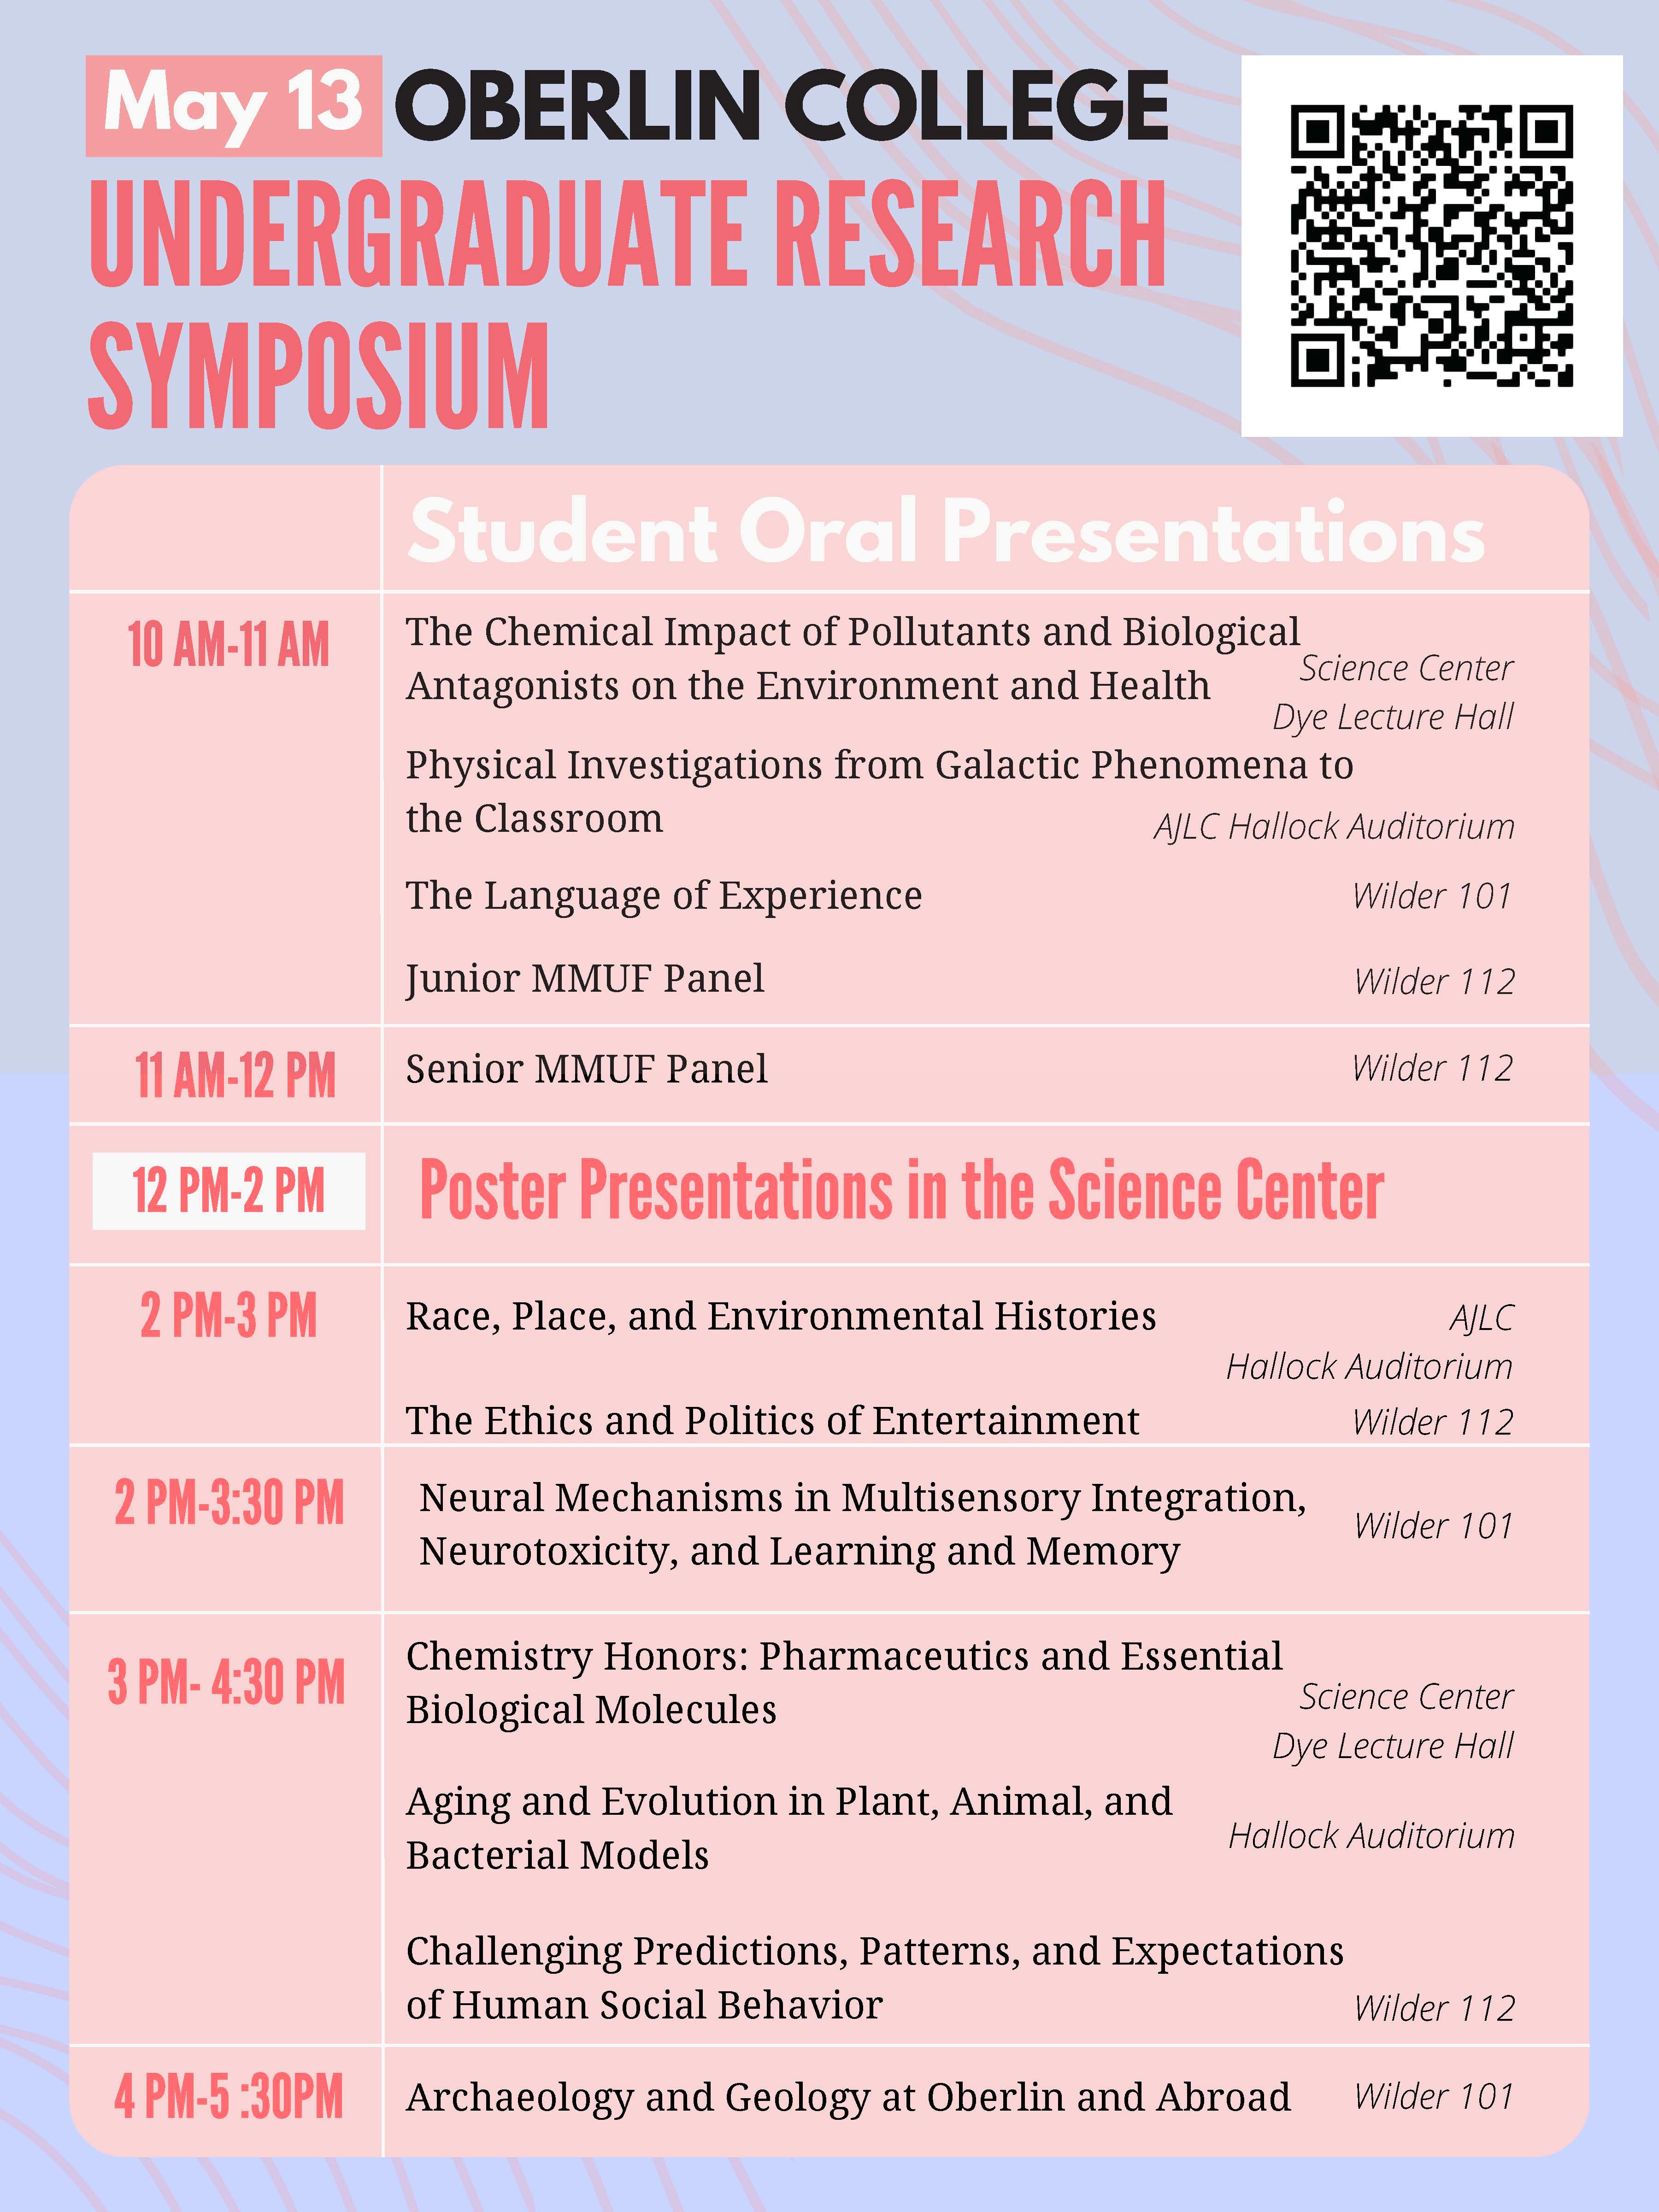 Undergraduate Research Symposium Schedule at a Glance